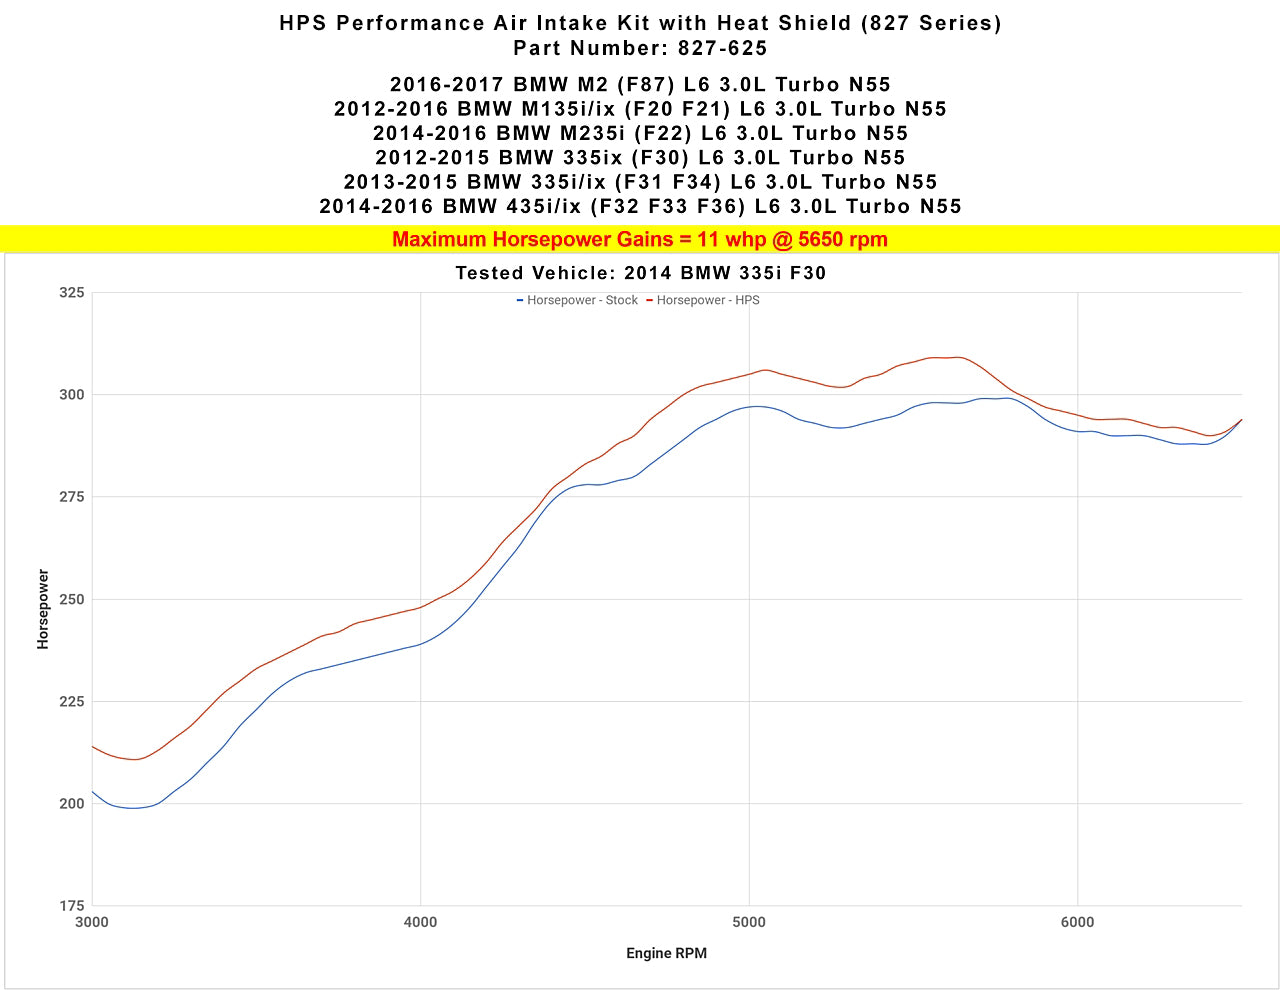 Dyno proven gains 11 whp HPS Performance Shortram Air Intake Kit 2014-2016 BMW 435i 435ix F32 F33 F36 3.0L Turbo N55 827-625P